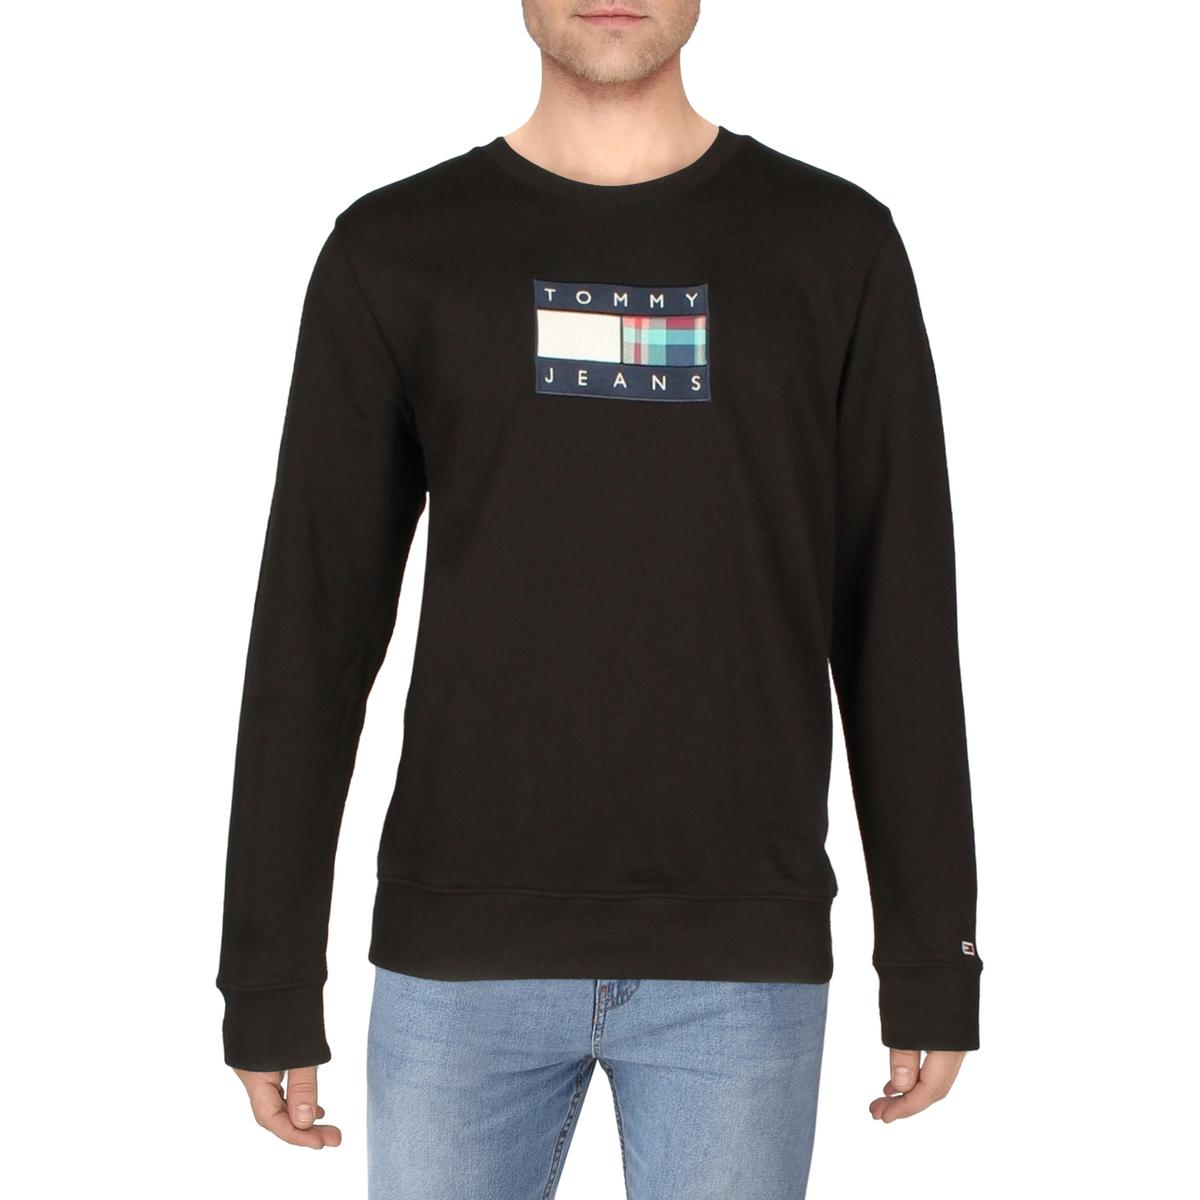 Tommy Hilfiger Mens Cotton Crewneck Sweatshirt